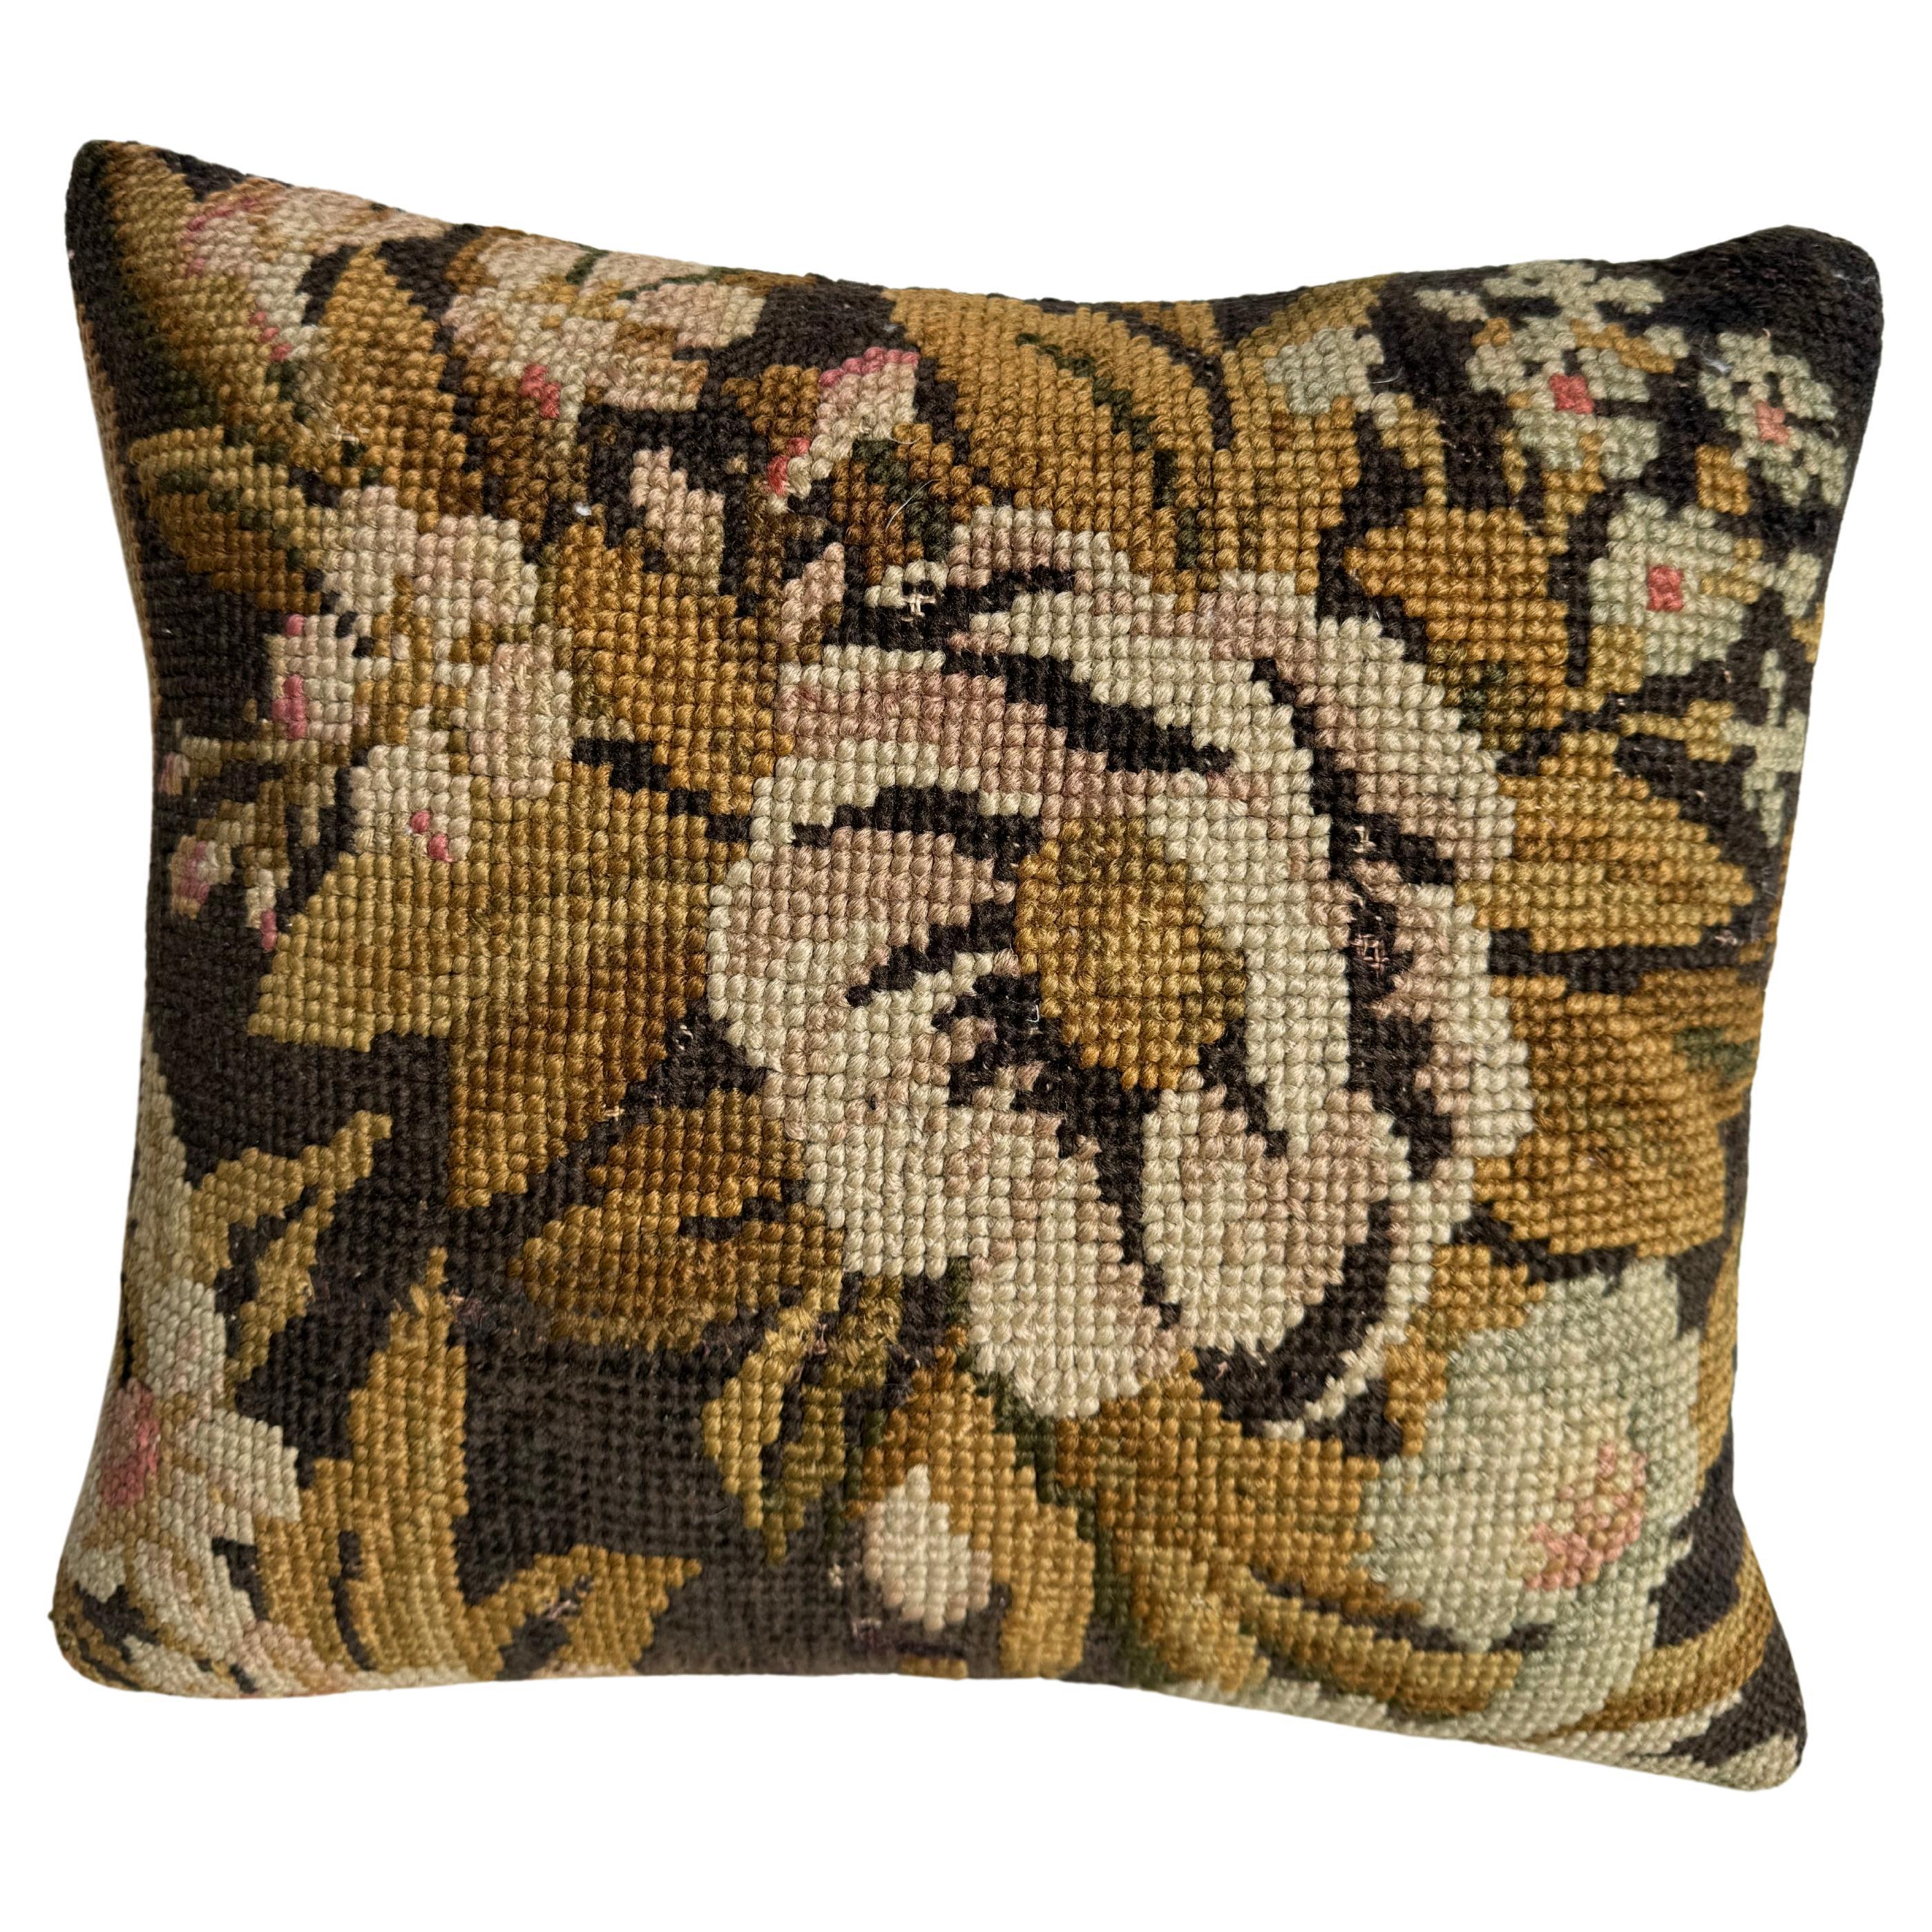 English Needlework Pillow 1850 - 14" x 13" For Sale